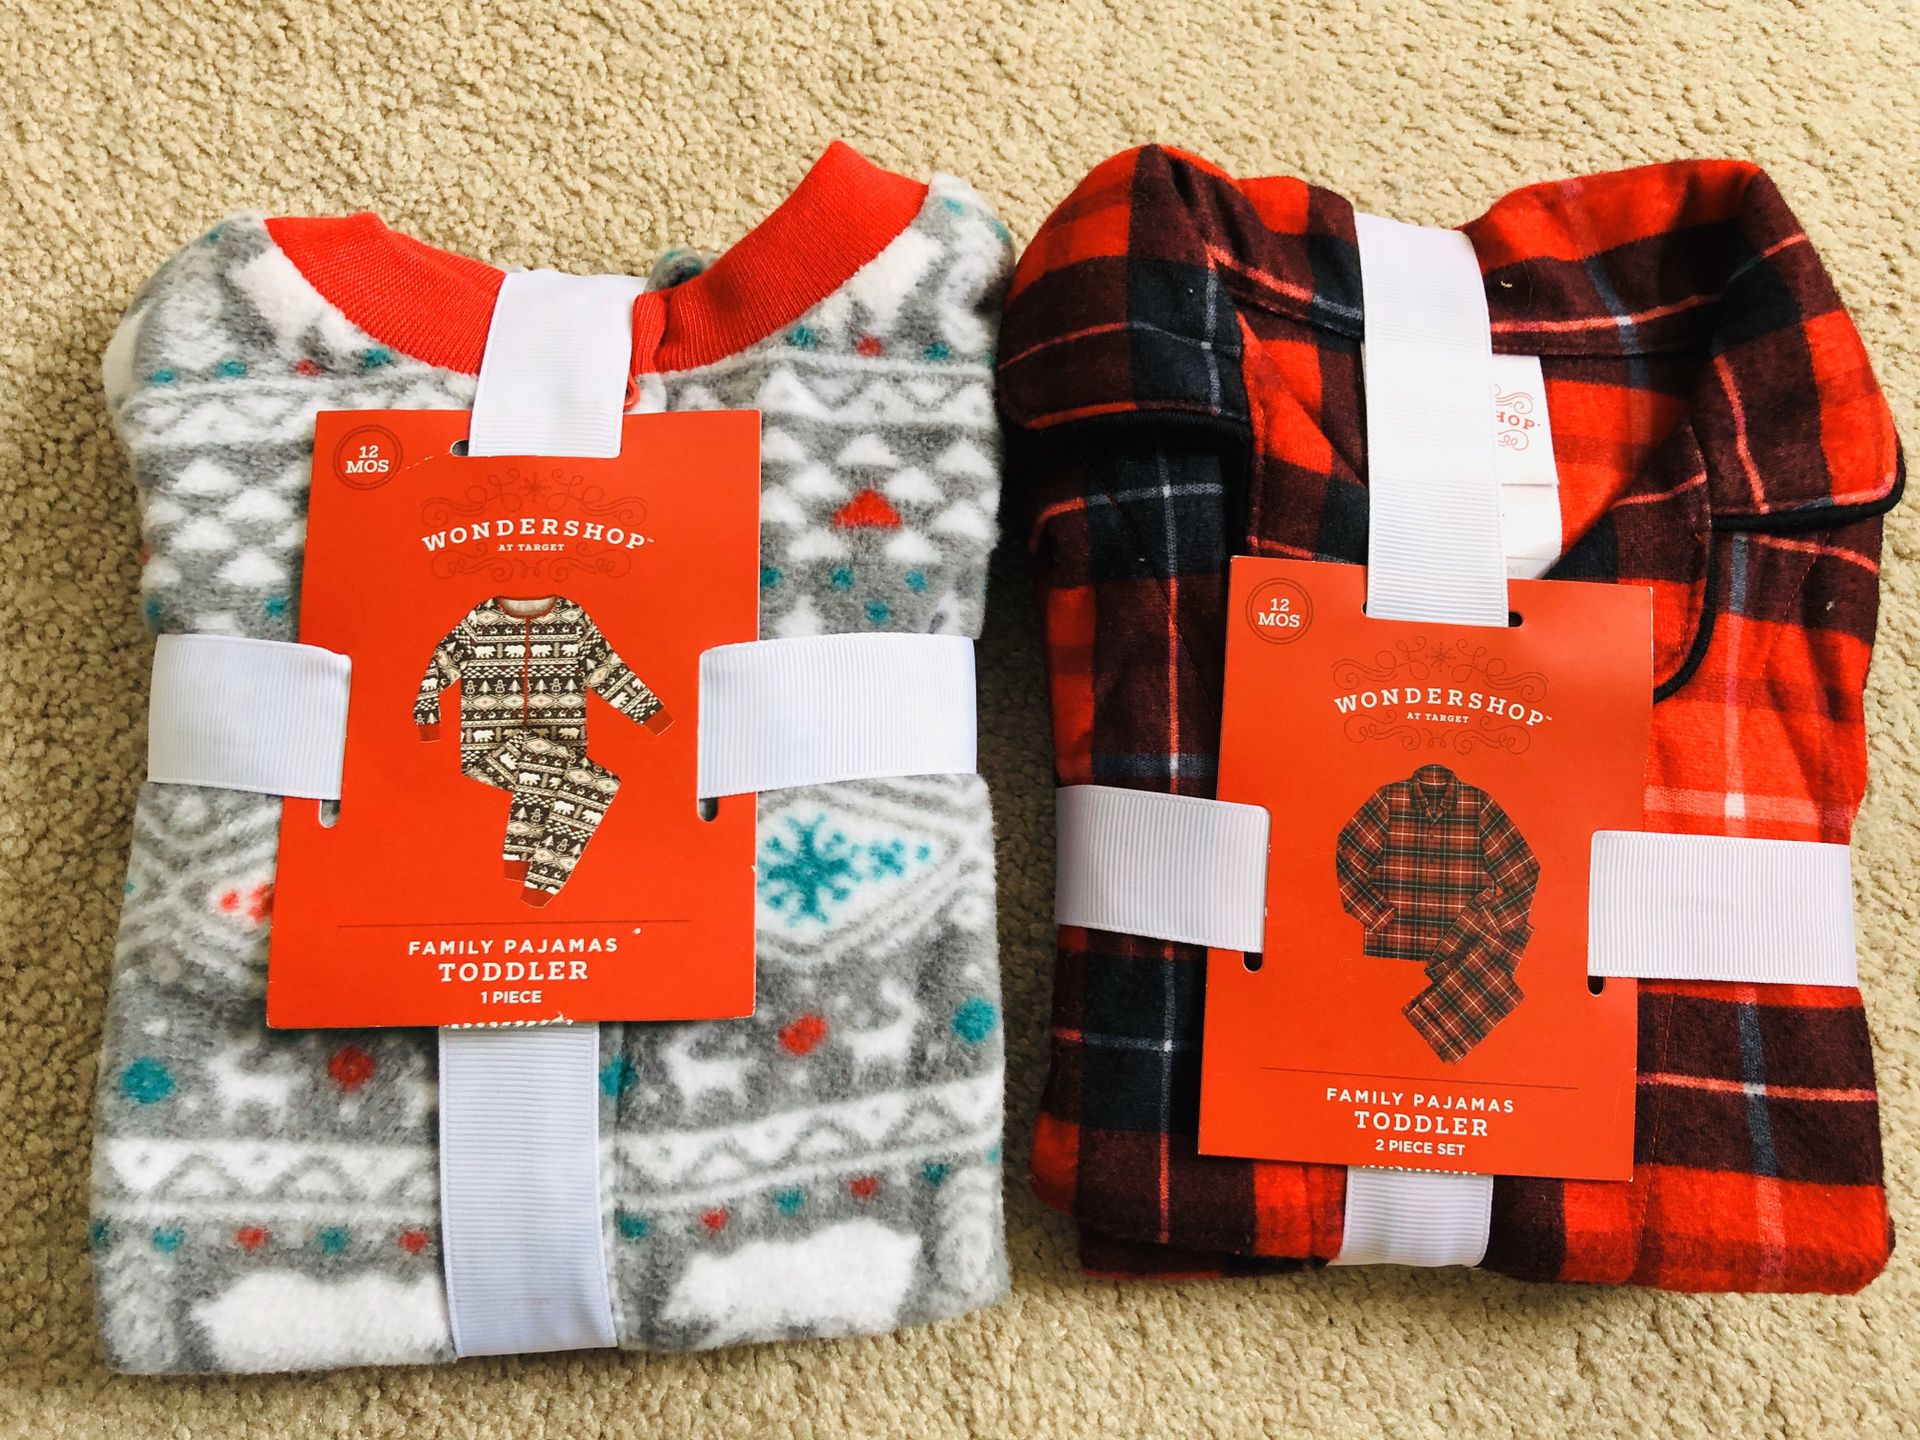 New wondershop Family pajamas 12 months 2 Piece Set & 1 Piece (pick up only)